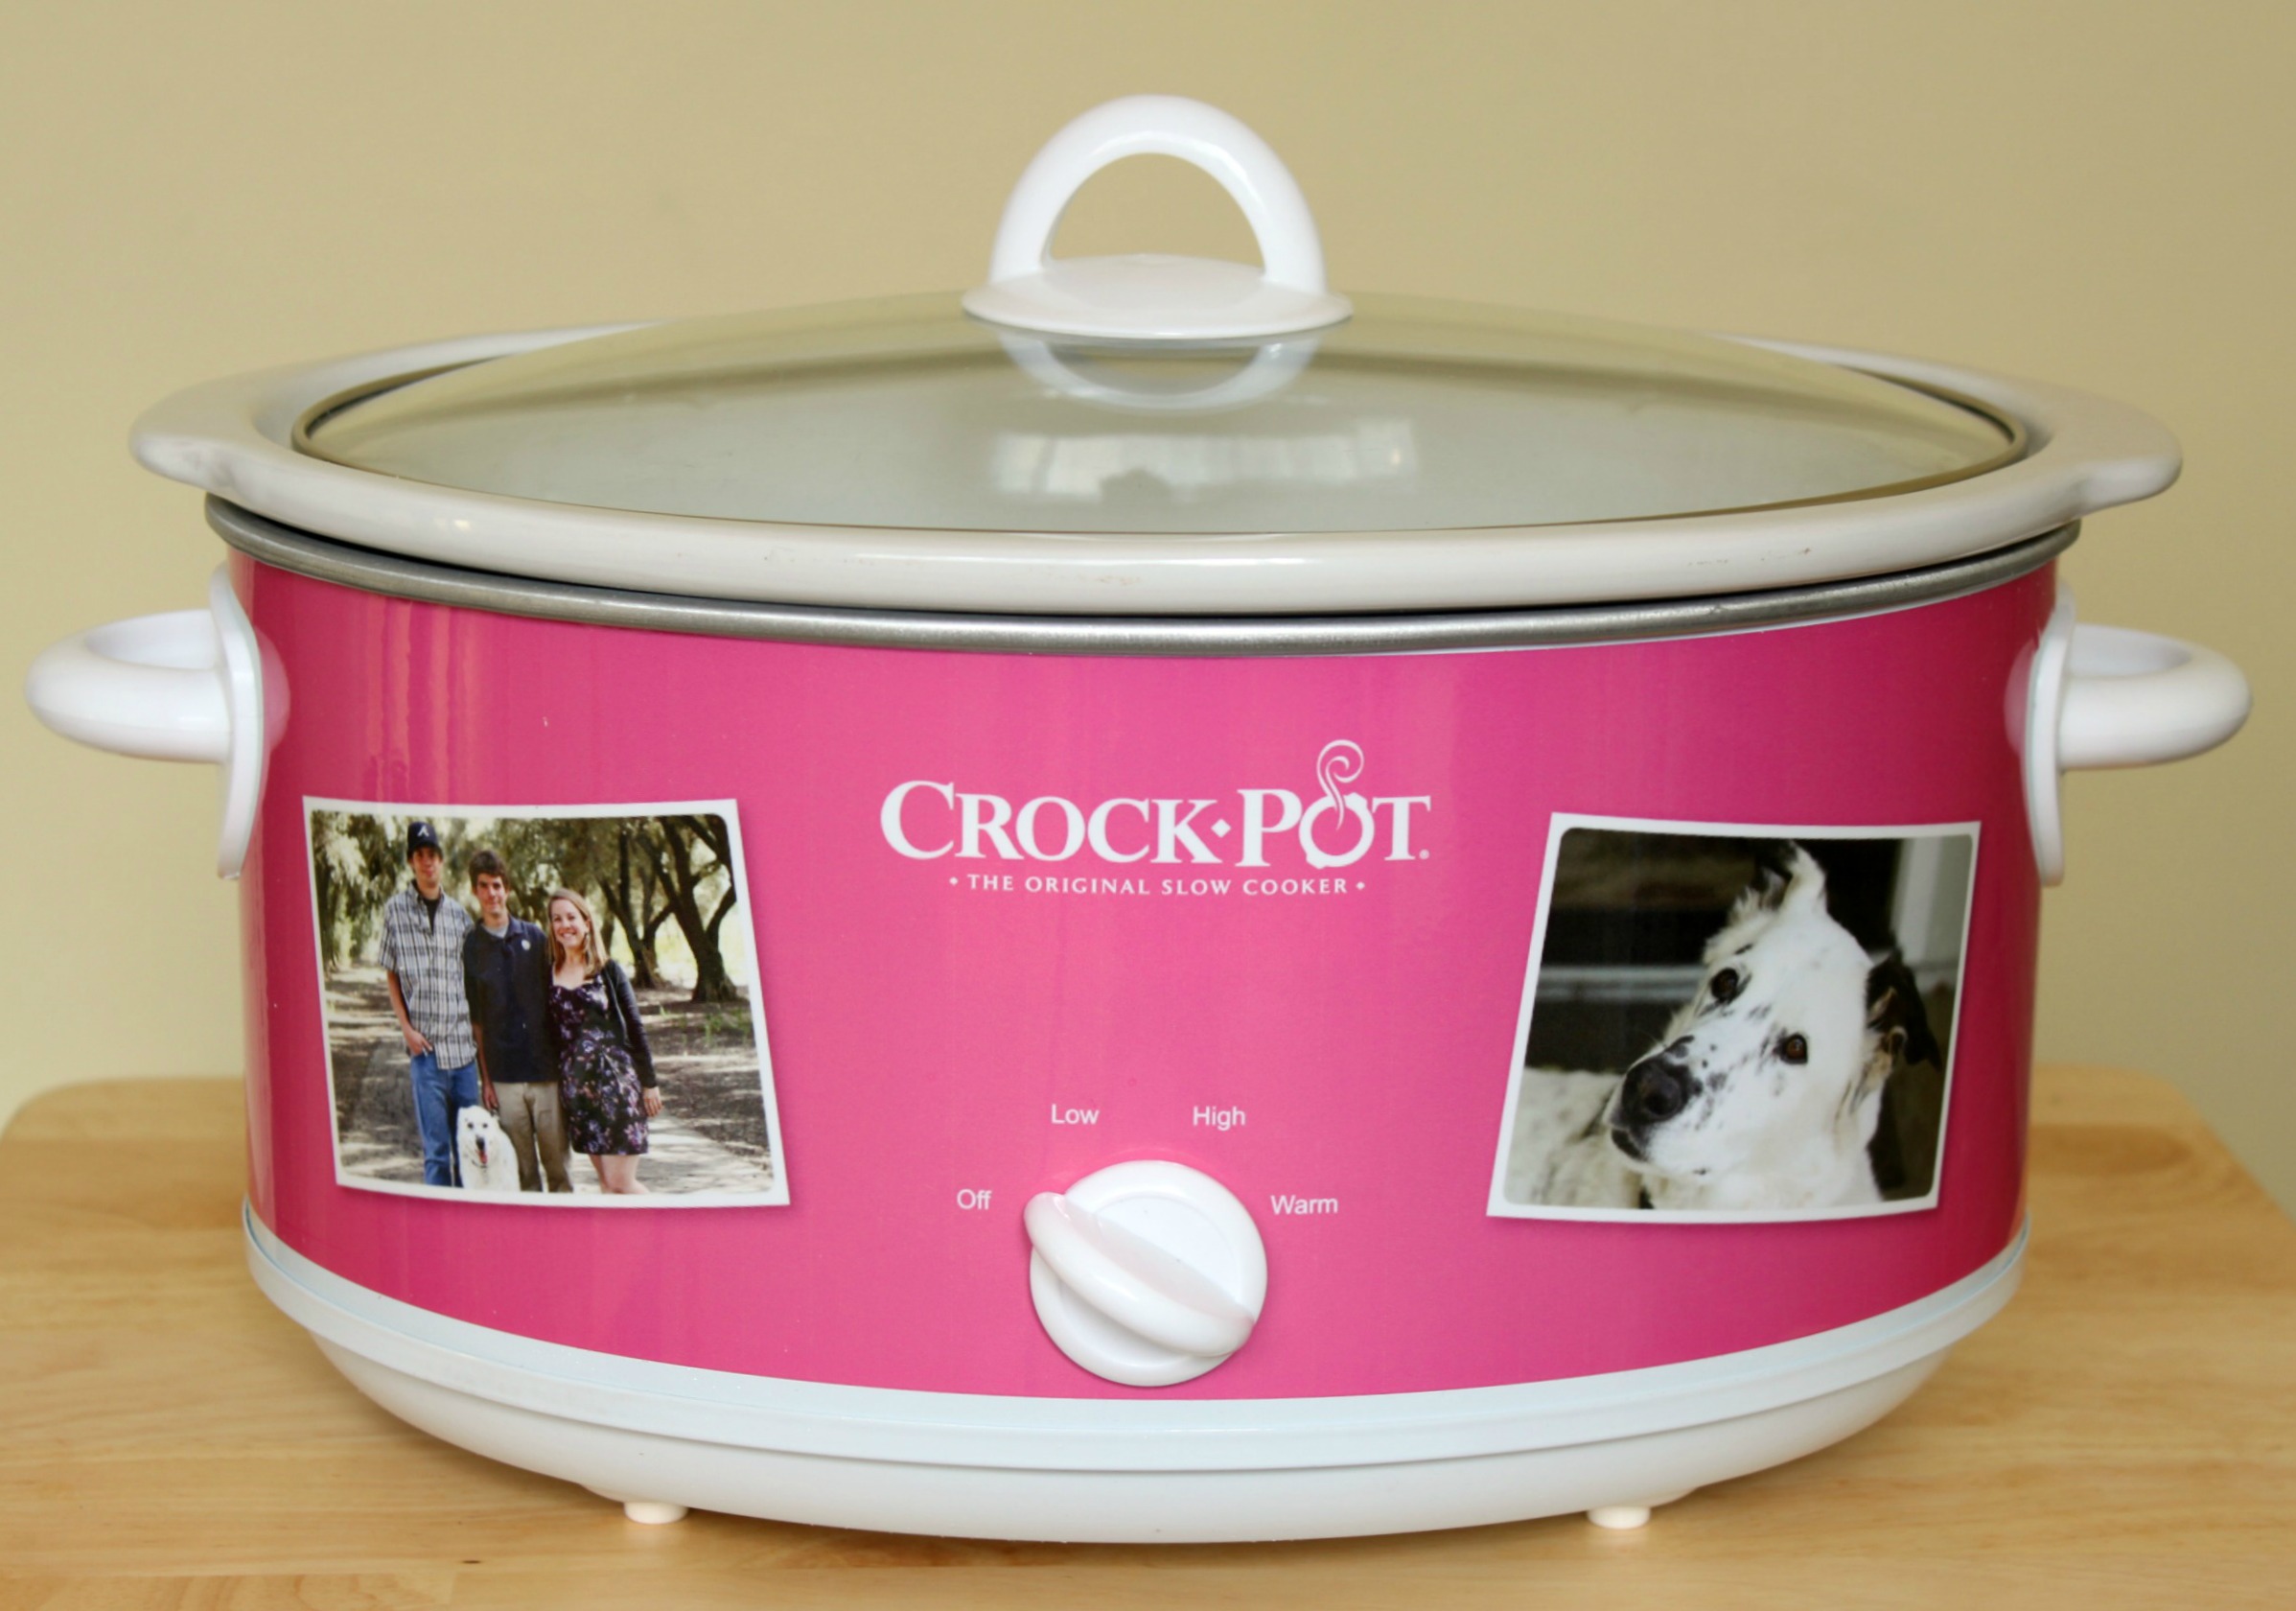 Create-A-Crock Crock-Pot Review